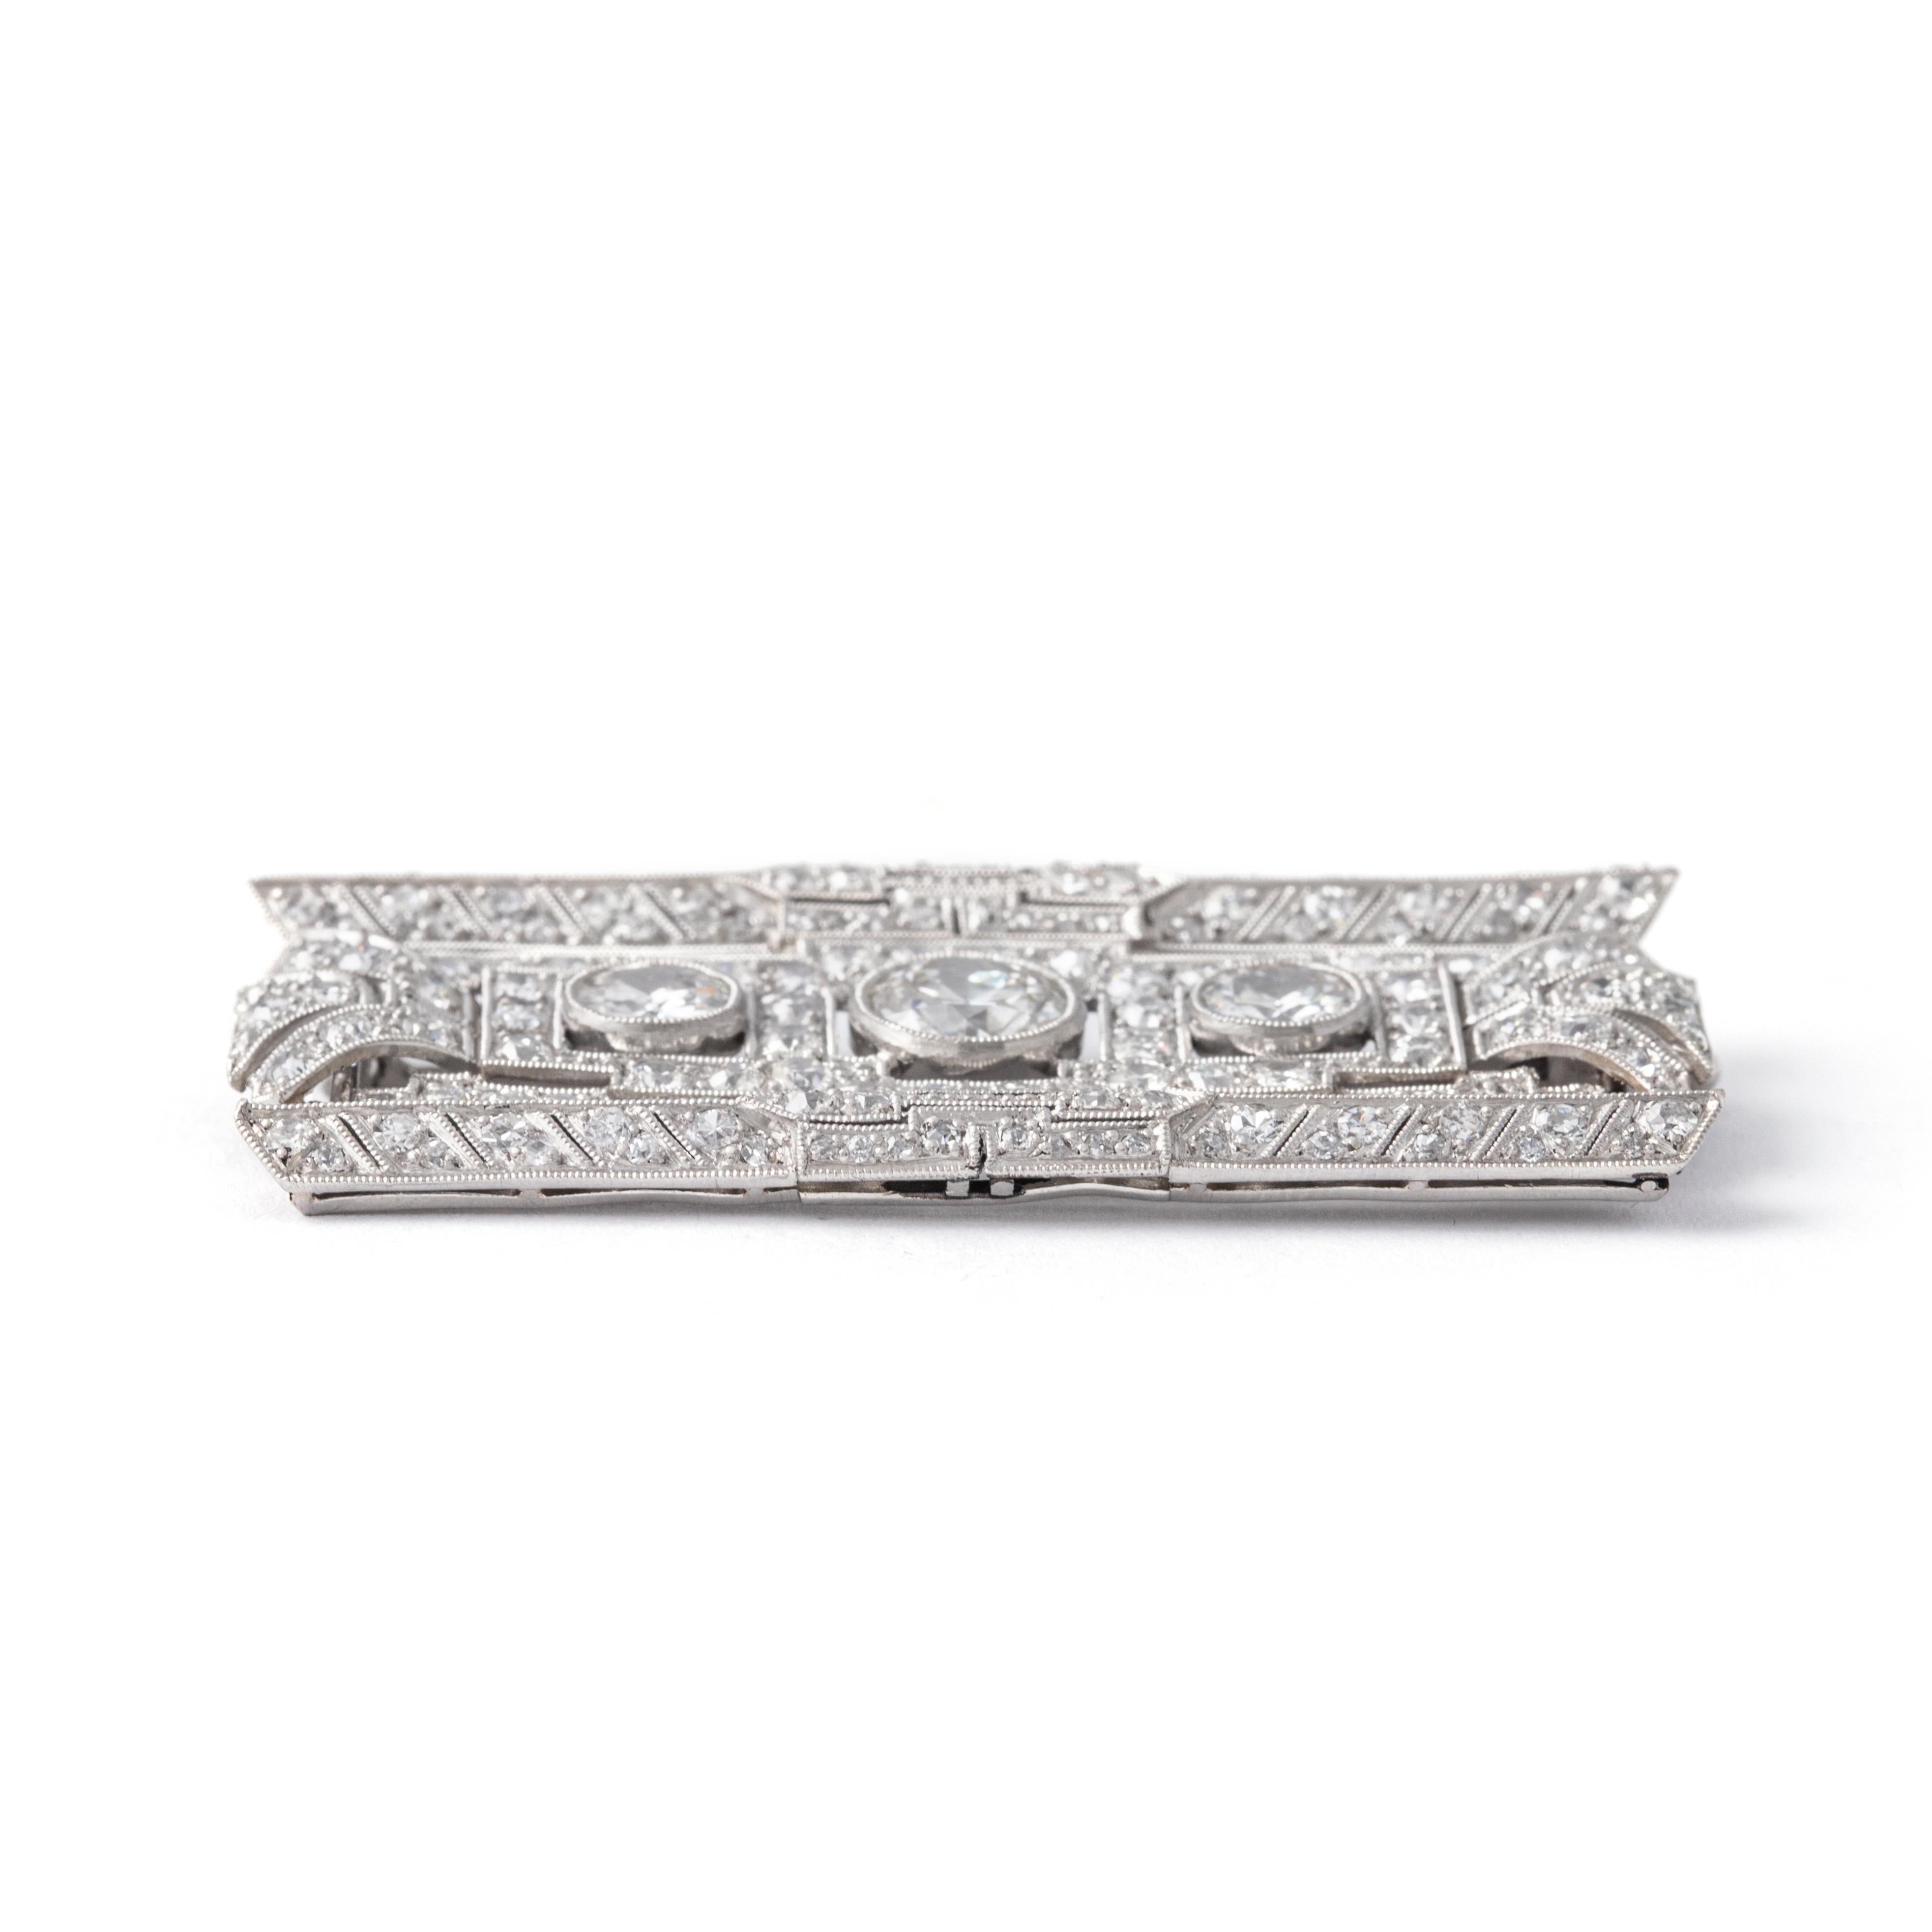 Art Deco Diamond Brooch. Circa 1930.

Total length: approx. 4.50 centimeters.
Total width: approx. 2.30 centimeters.

Total weight: 13.81 grams.
